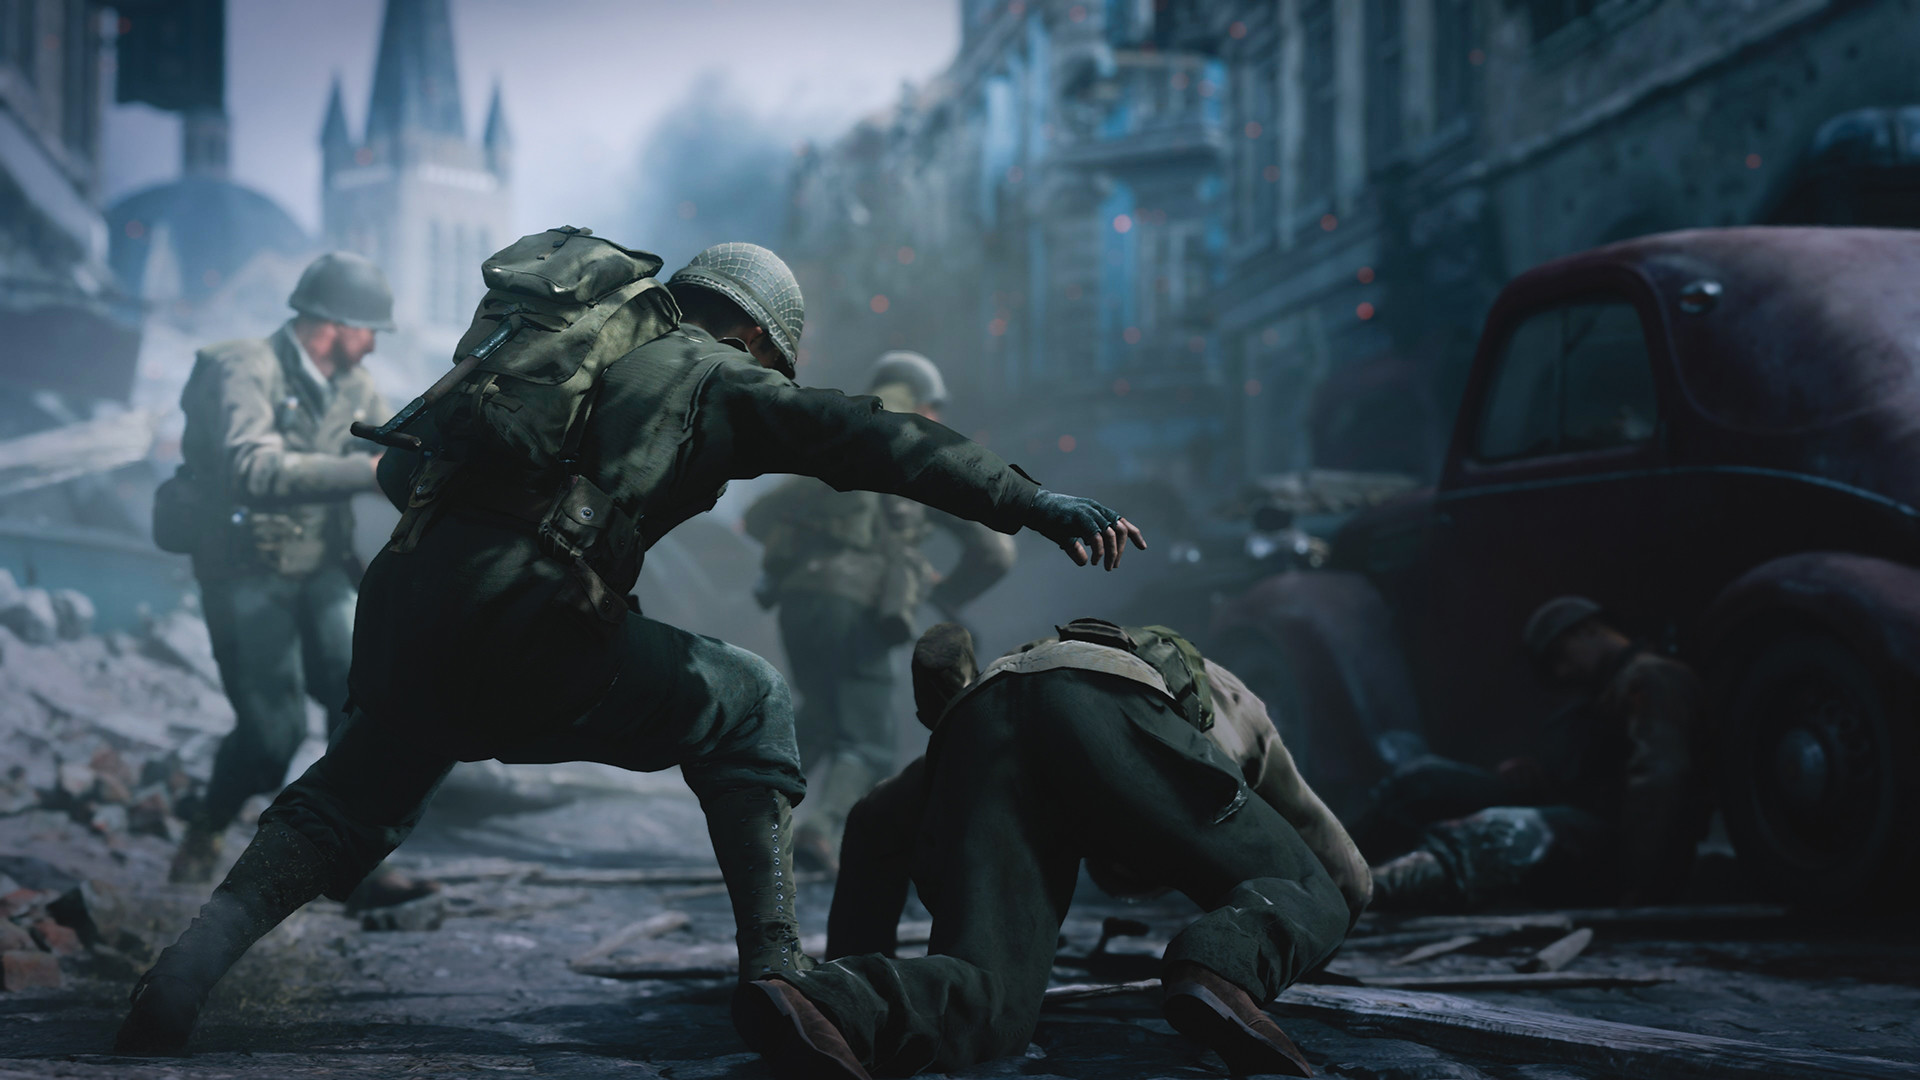 Call of Duty: WWII HD Wallpaper